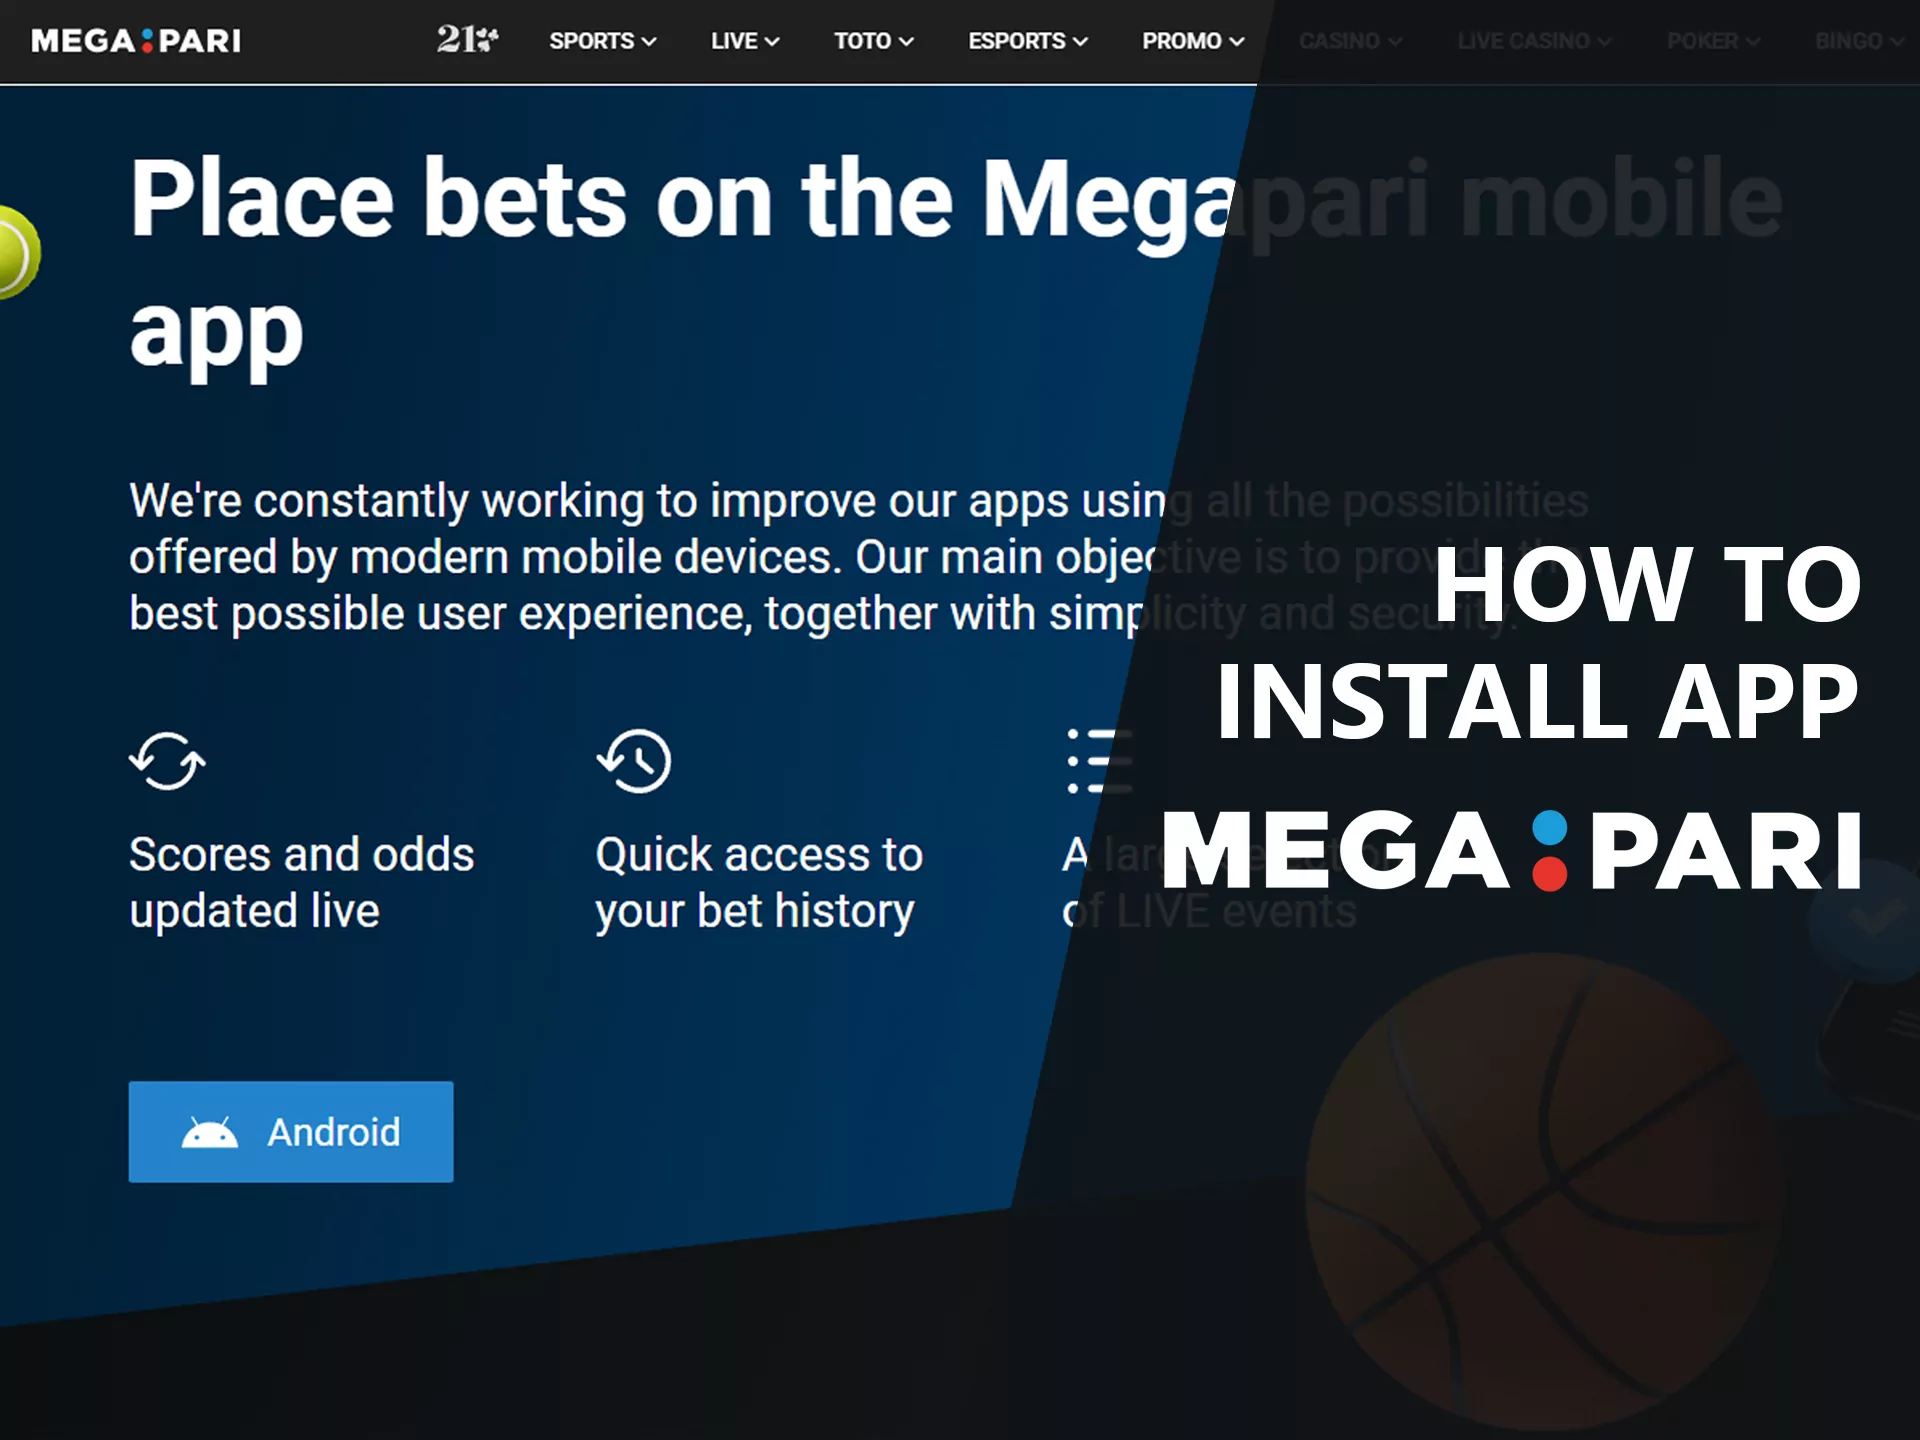 Install the Megapari app following the instructions below.